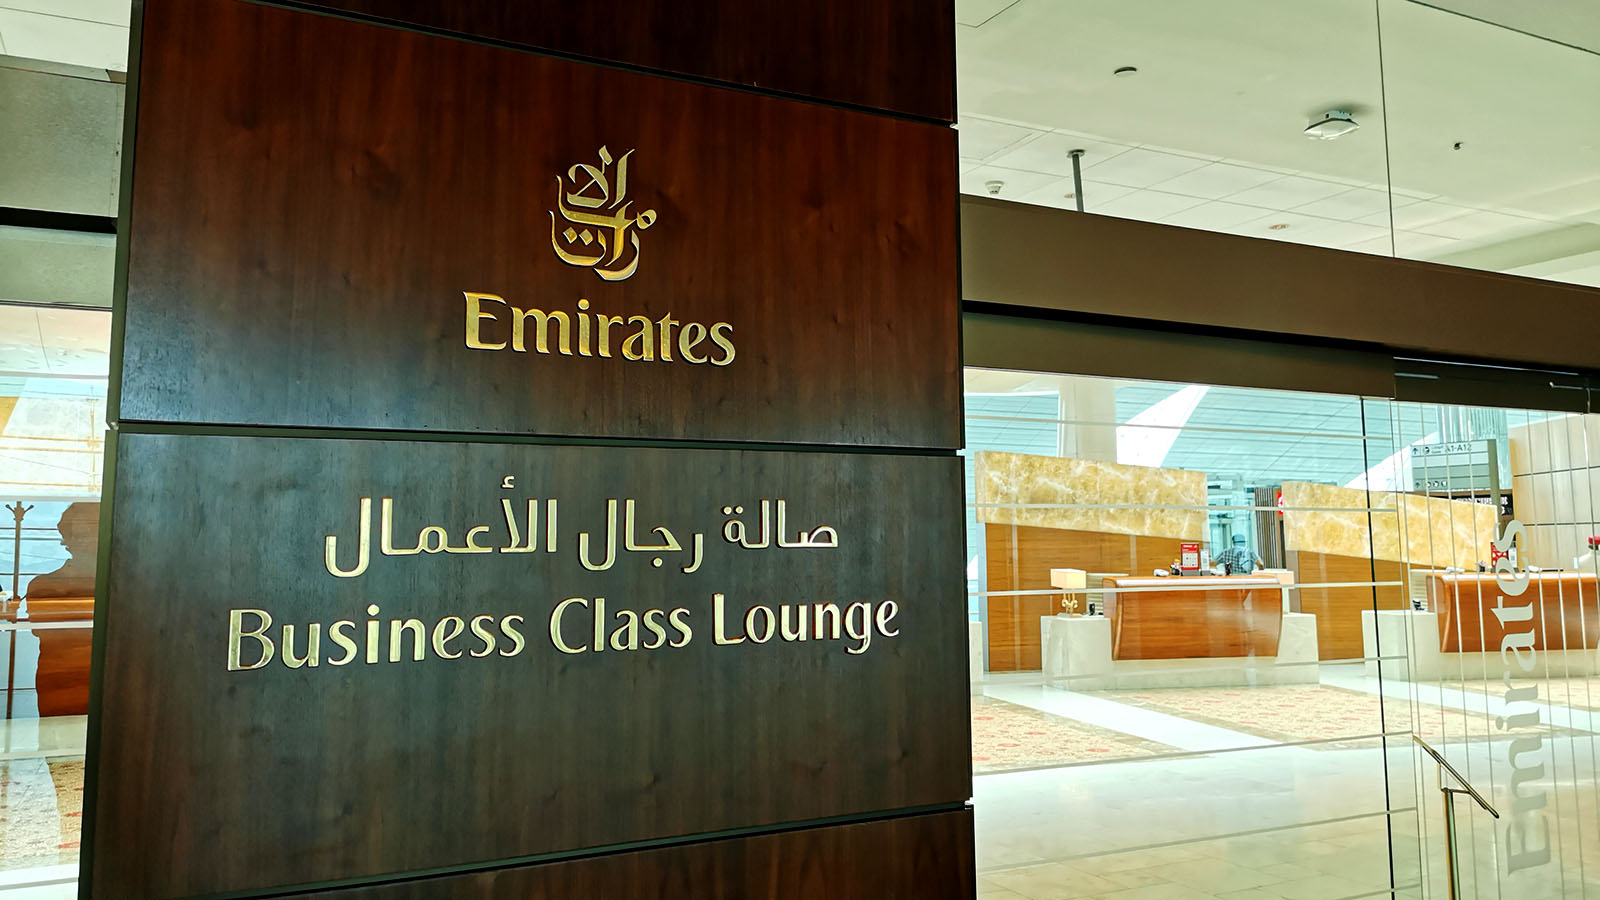 Outside the Emirates Business Class Lounge, Dubai Concourse A